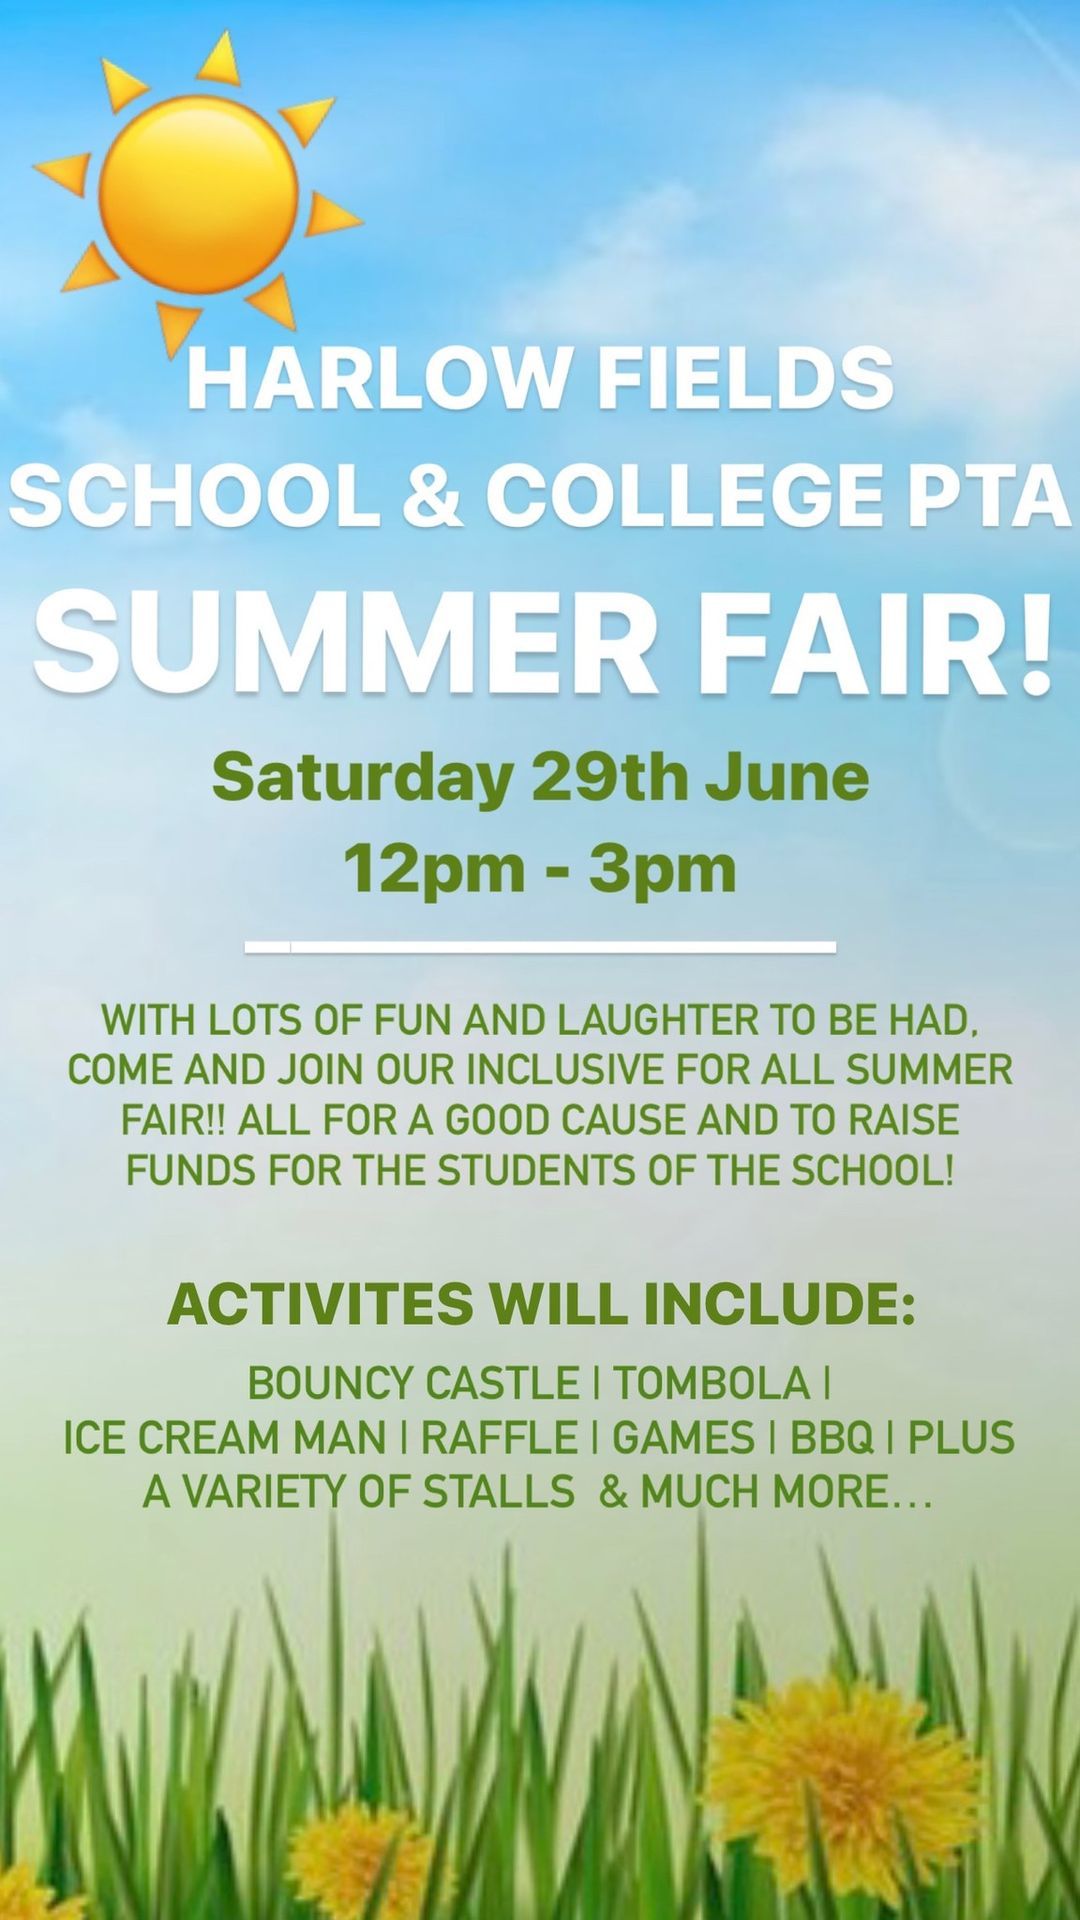 Harlow Fields School & College PTA summer fair! 